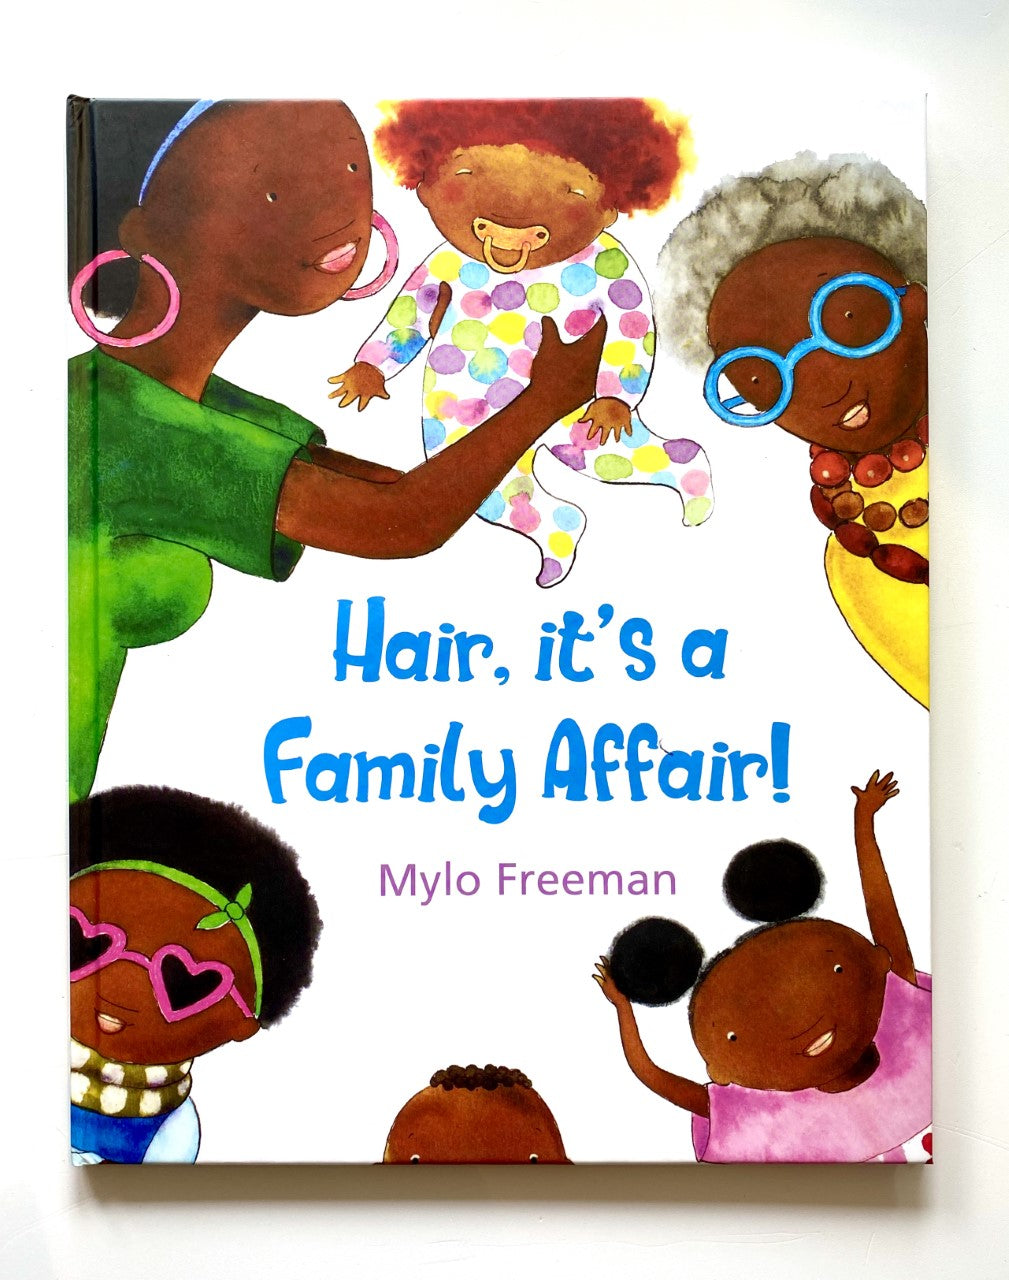 Hair, it's a Family Affair